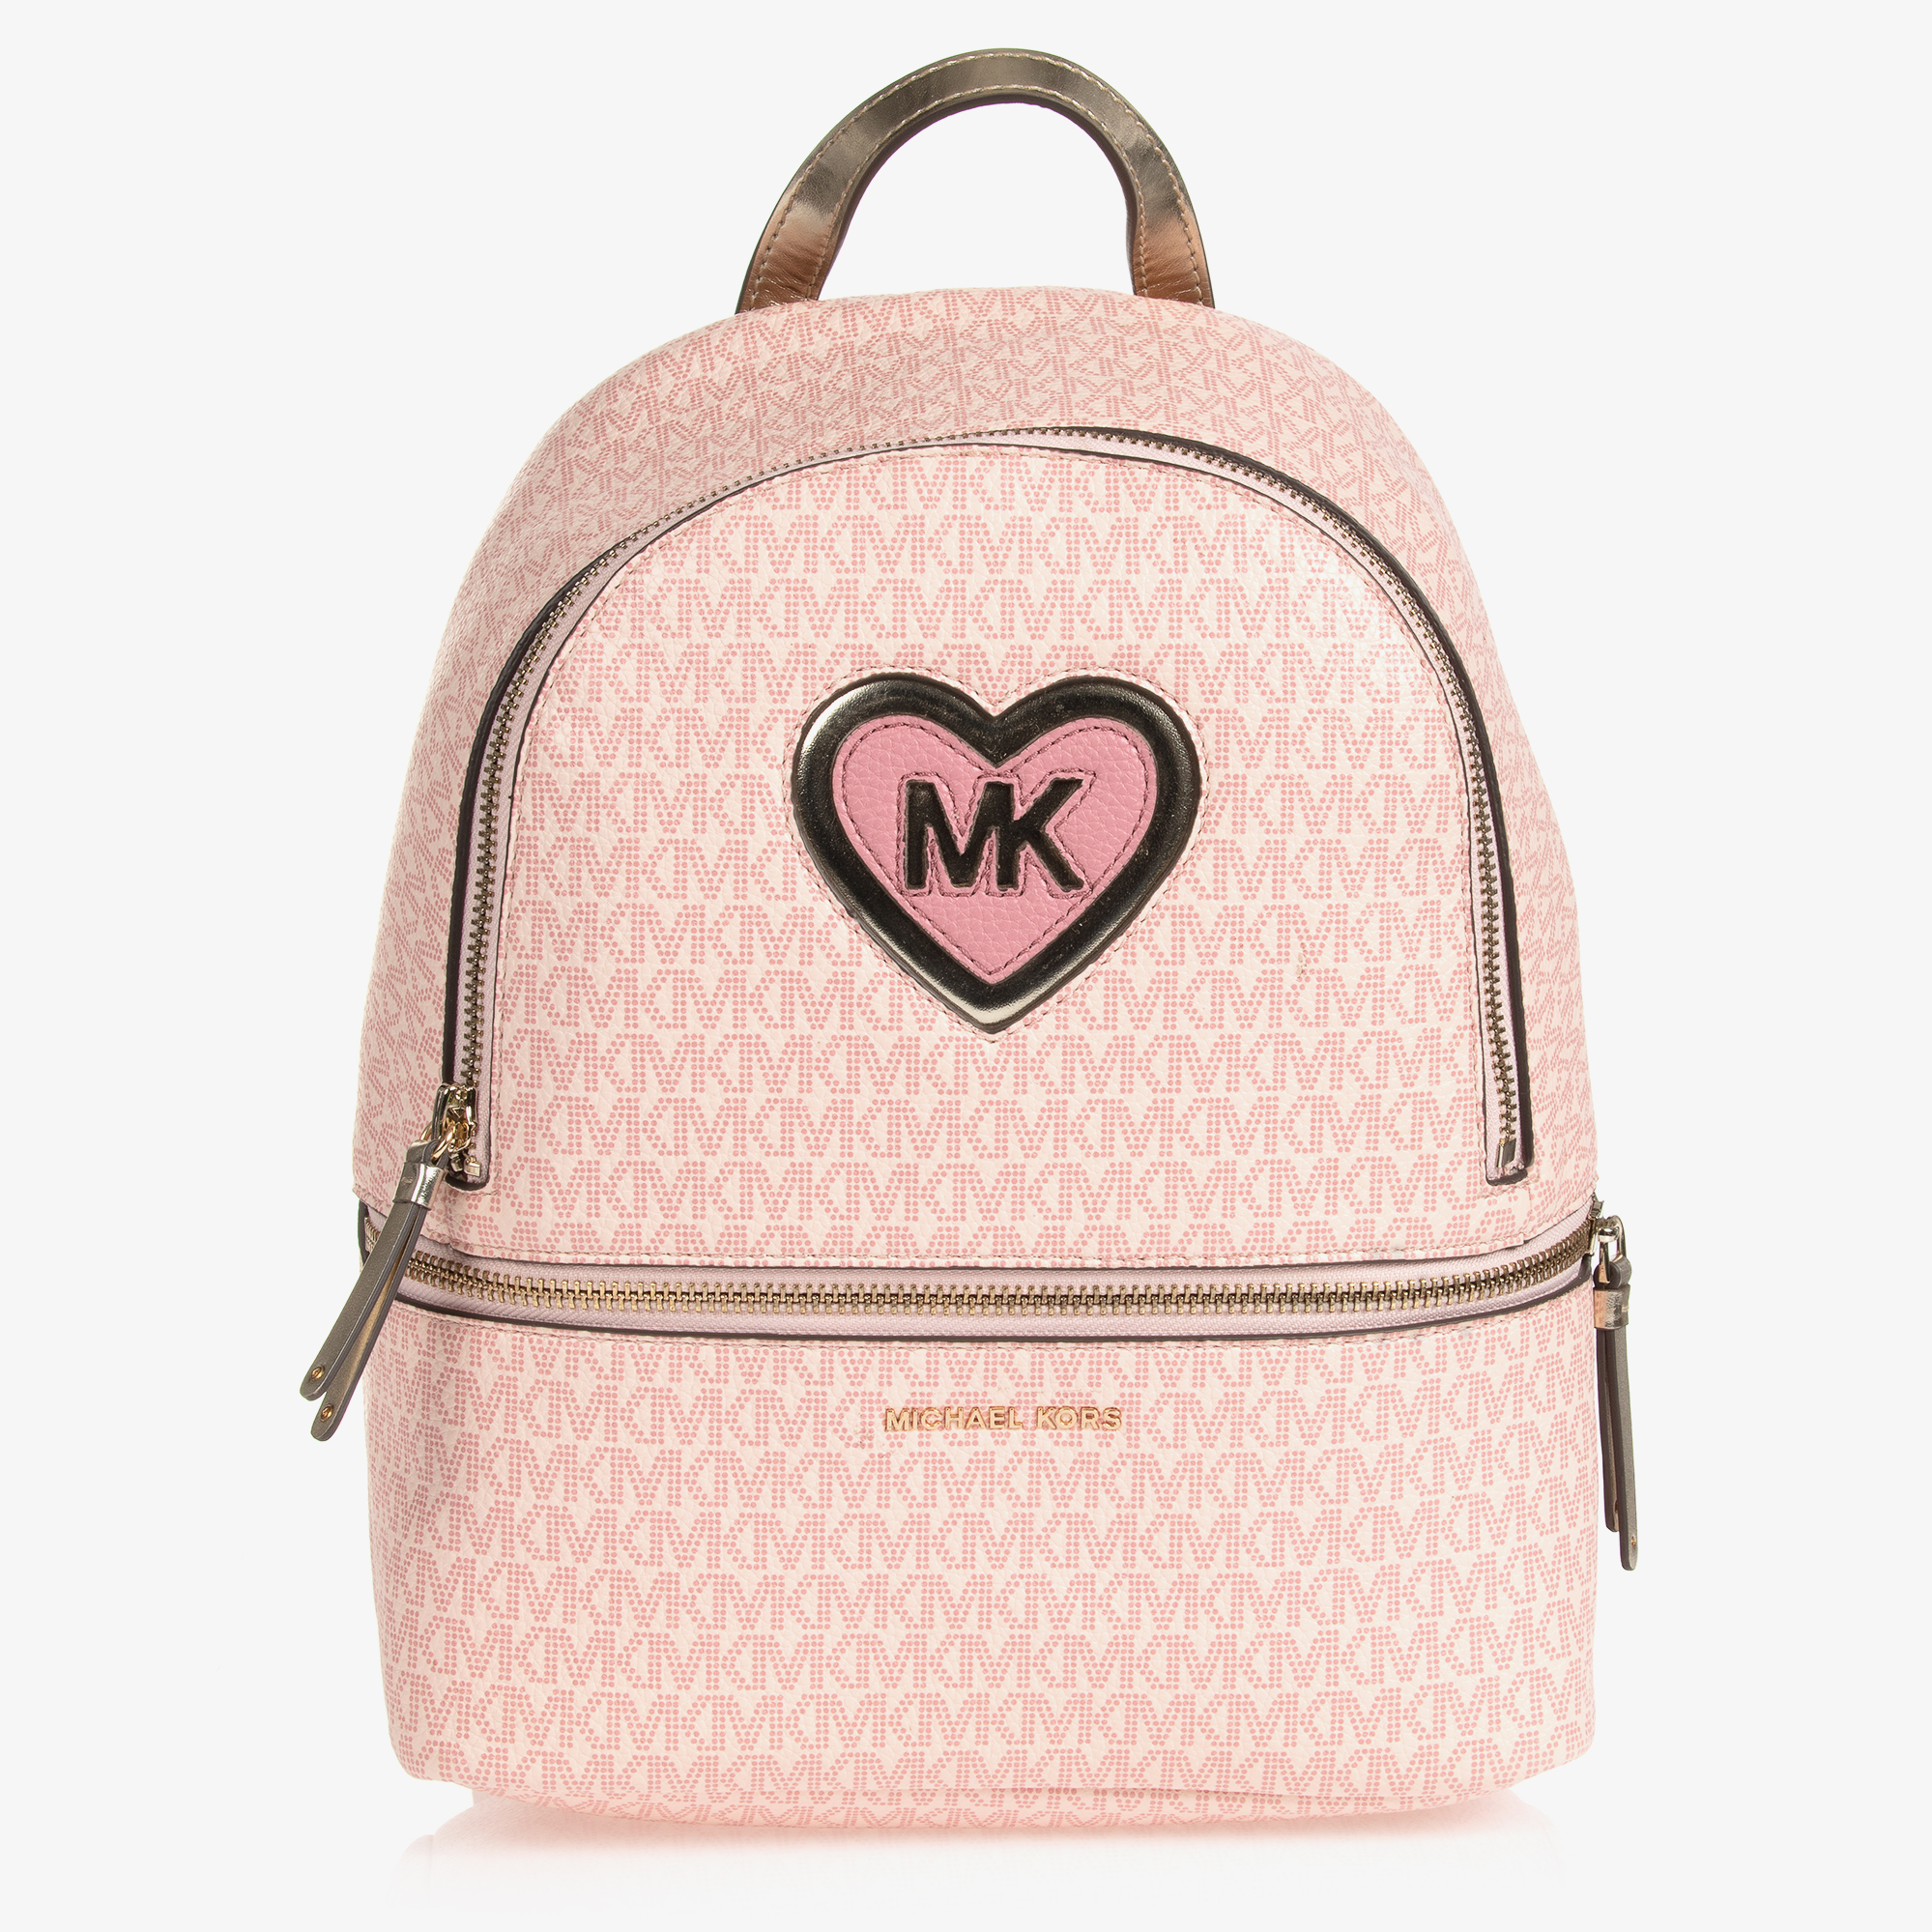 Buy the Michael Kors Backpack Pink, Black